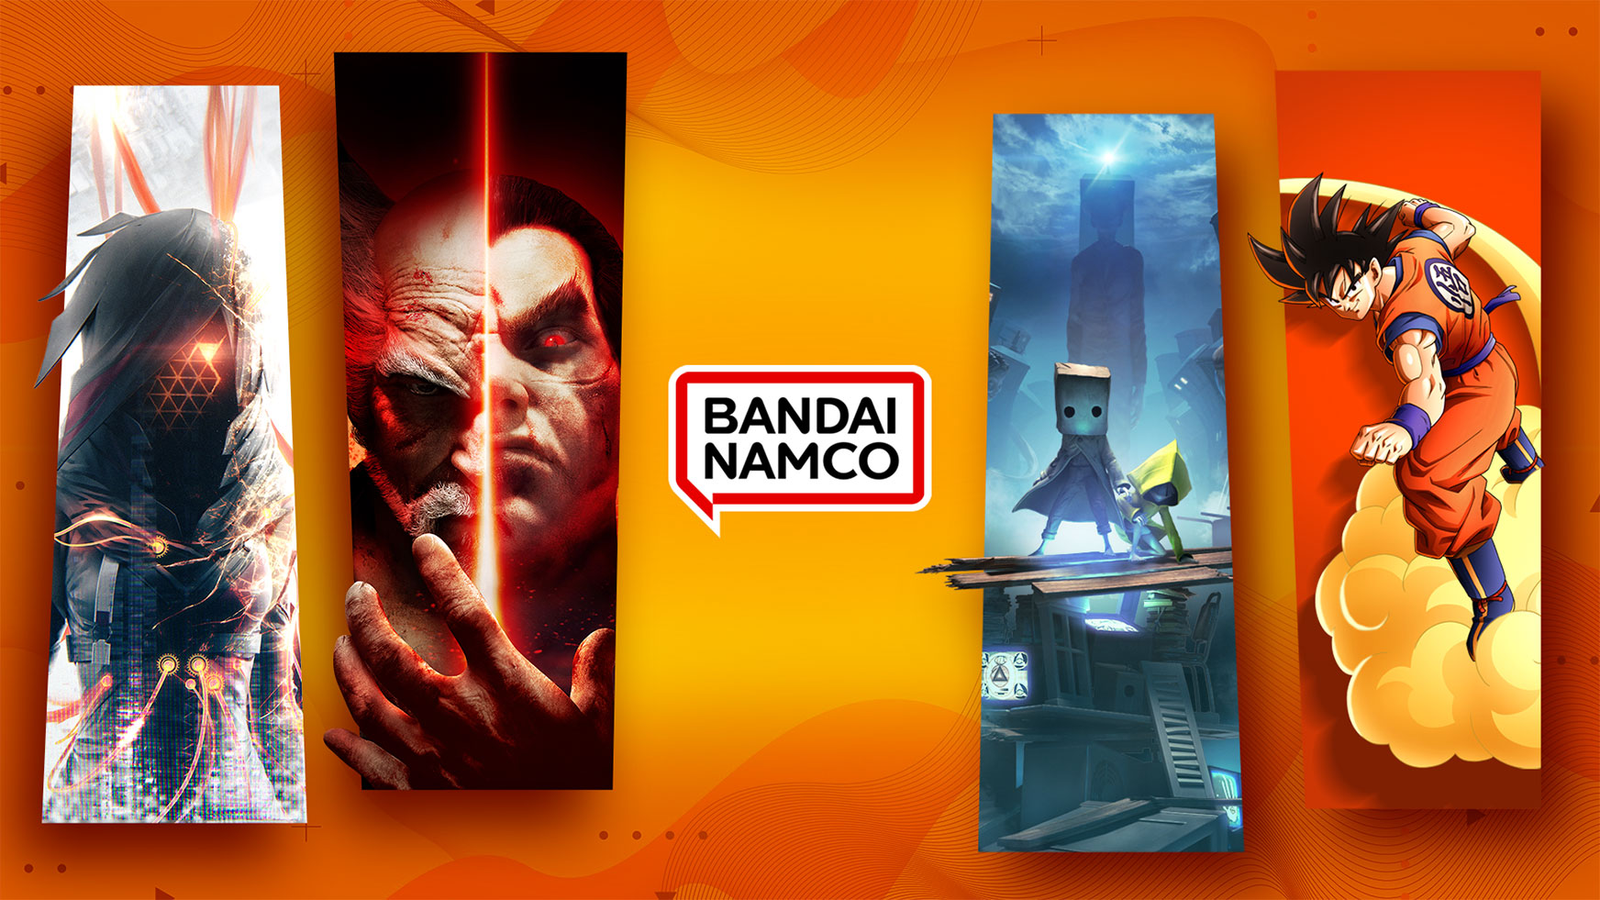 Bandai Namco H1 sales rise above expectations